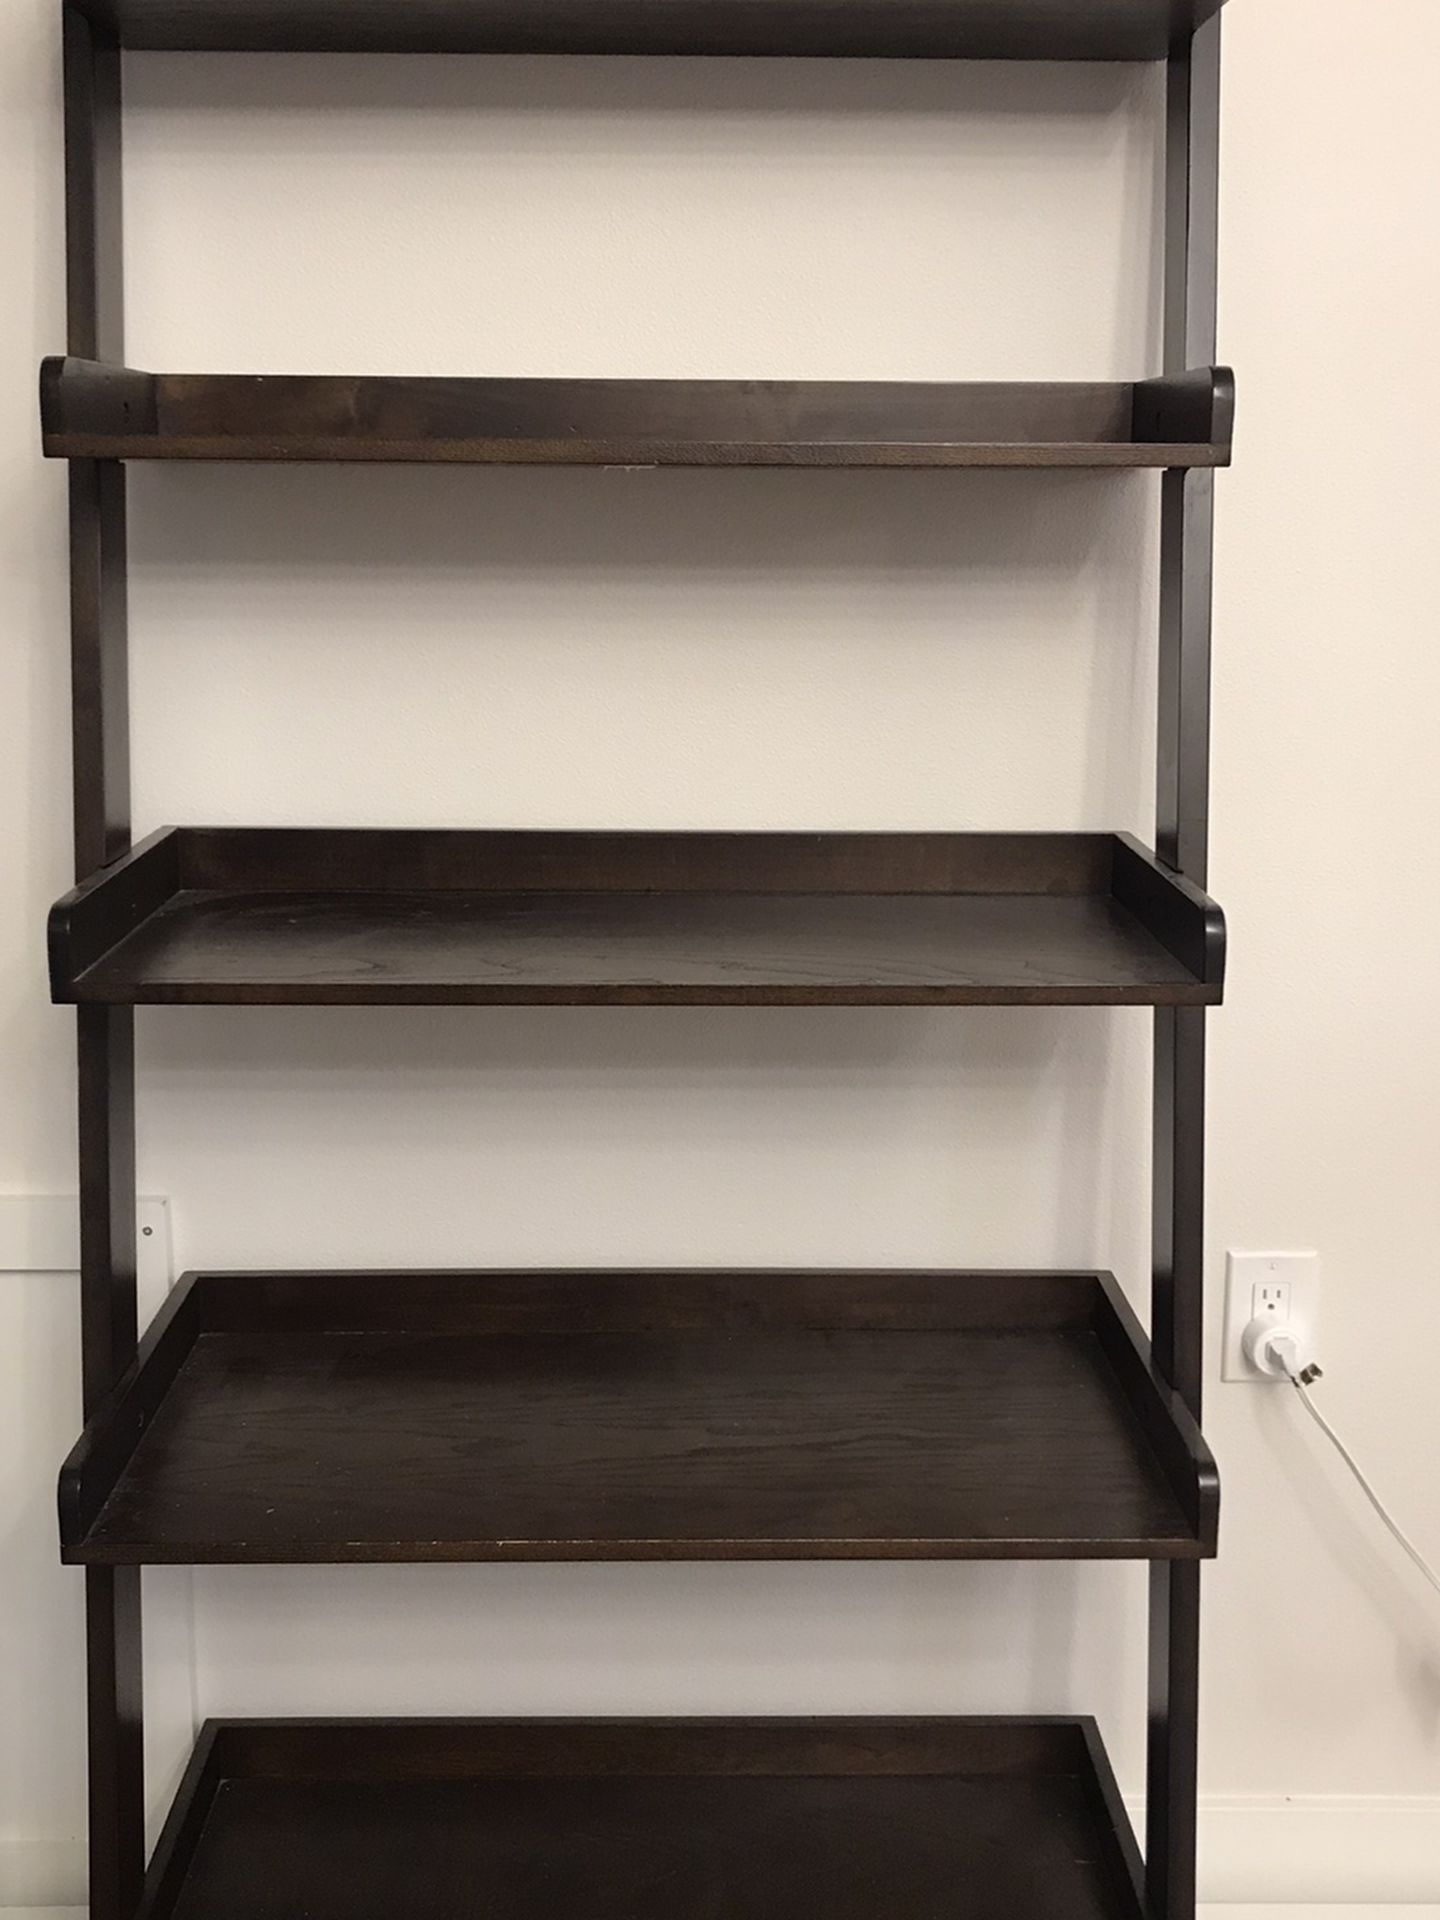 5 level Shelf